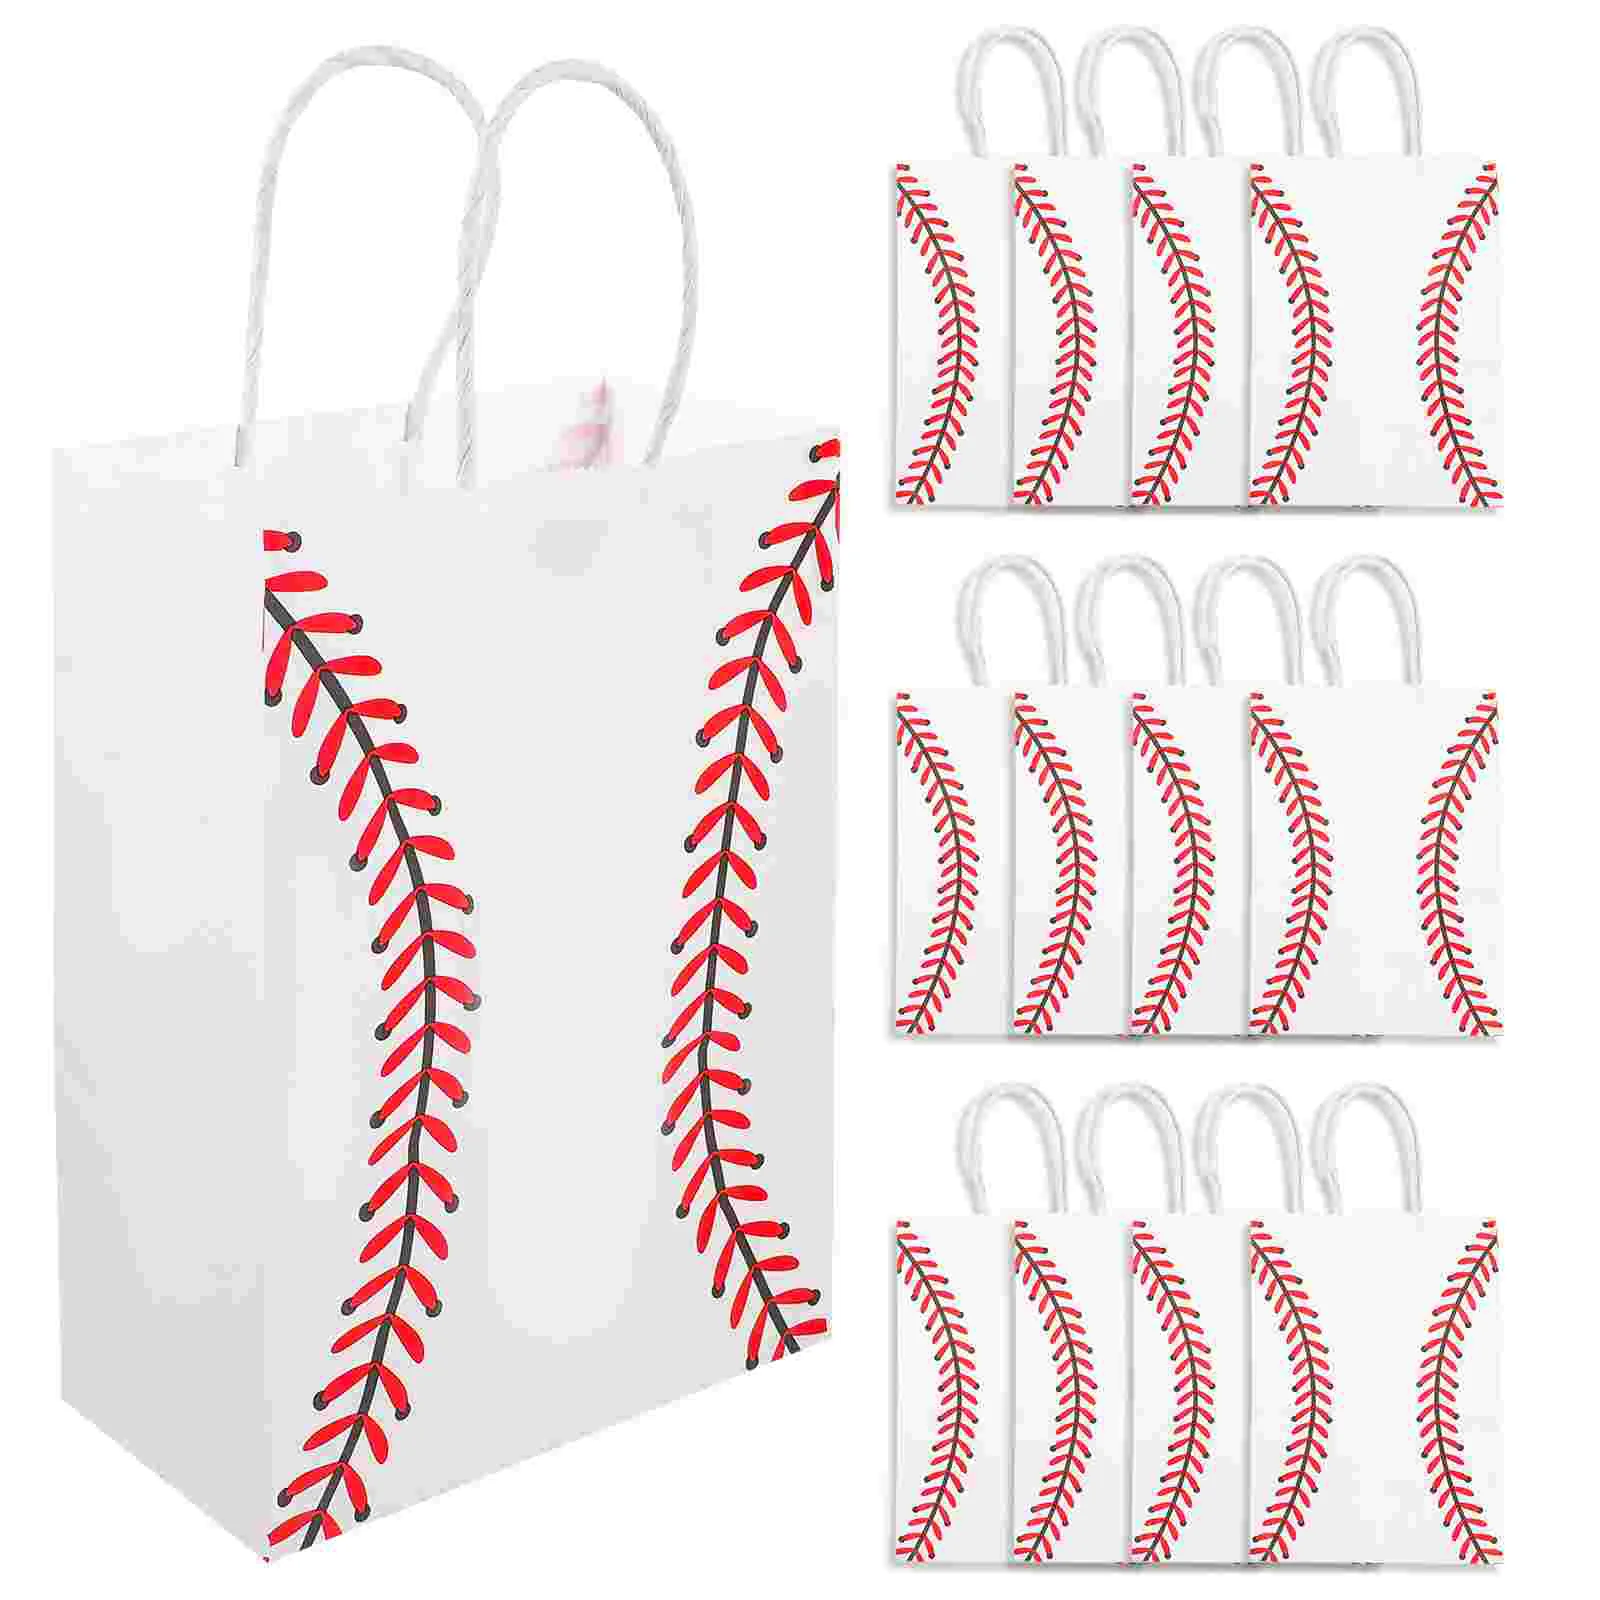 12pcs Sports Themed Paper Bags Handheld Baseball Tote Bag Football Printing Gift Packaging Bags Party Favor